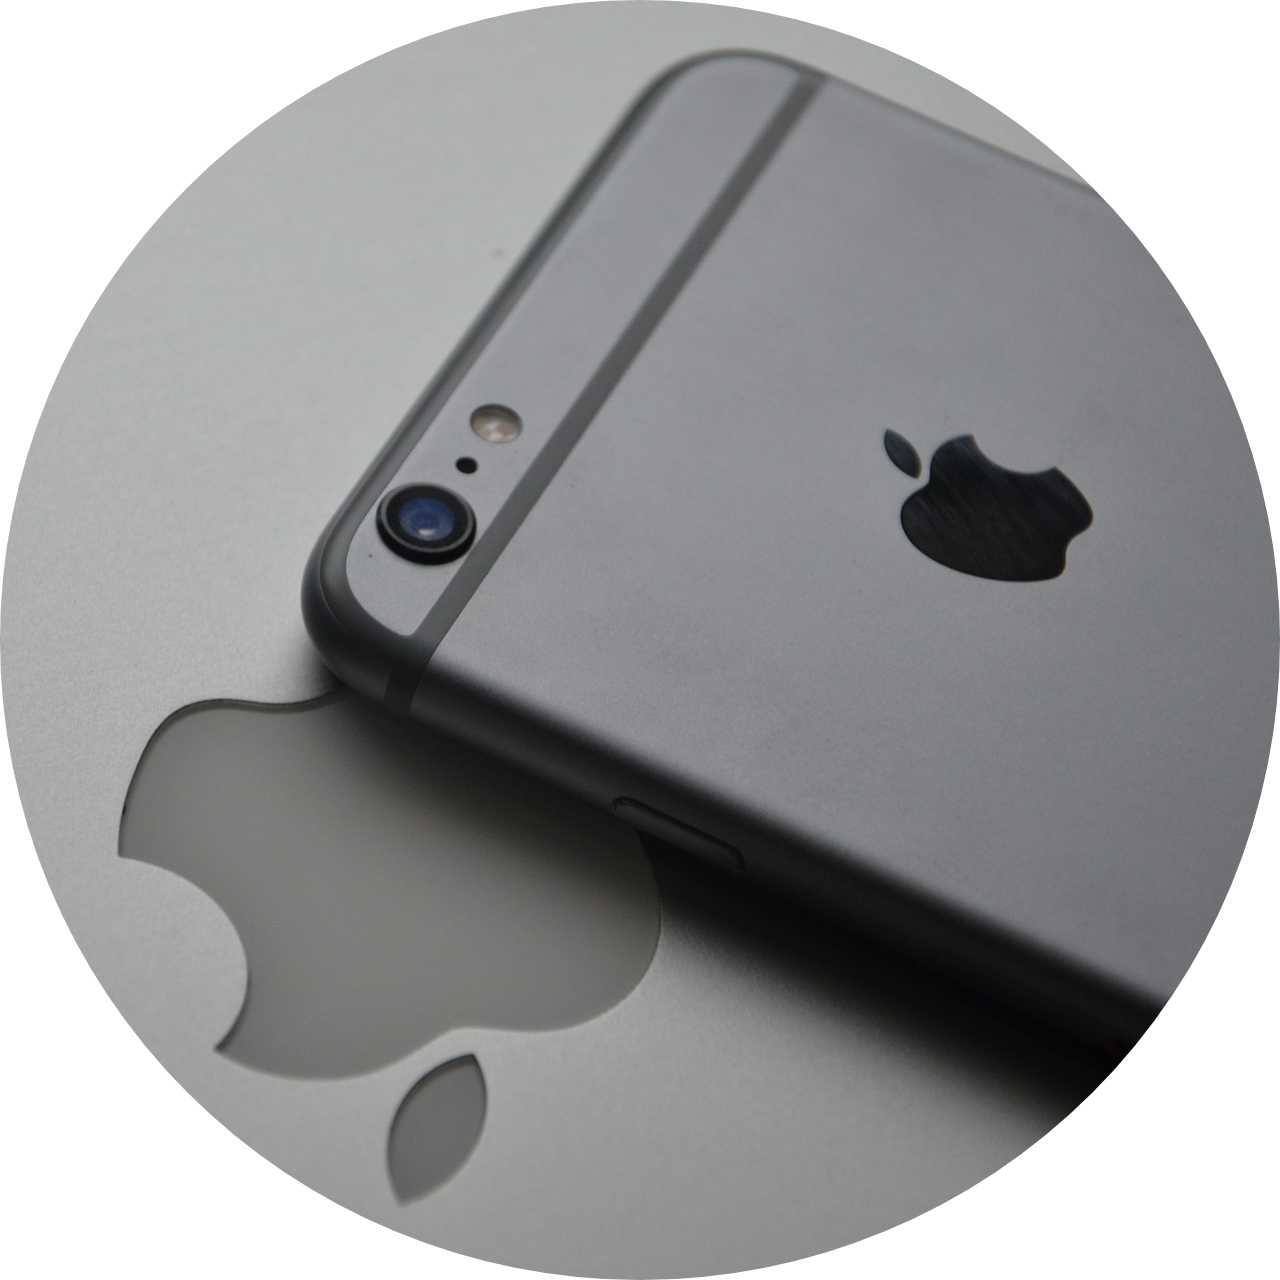 iPhone and Macbook Pro on iPhoneStorytelling.com